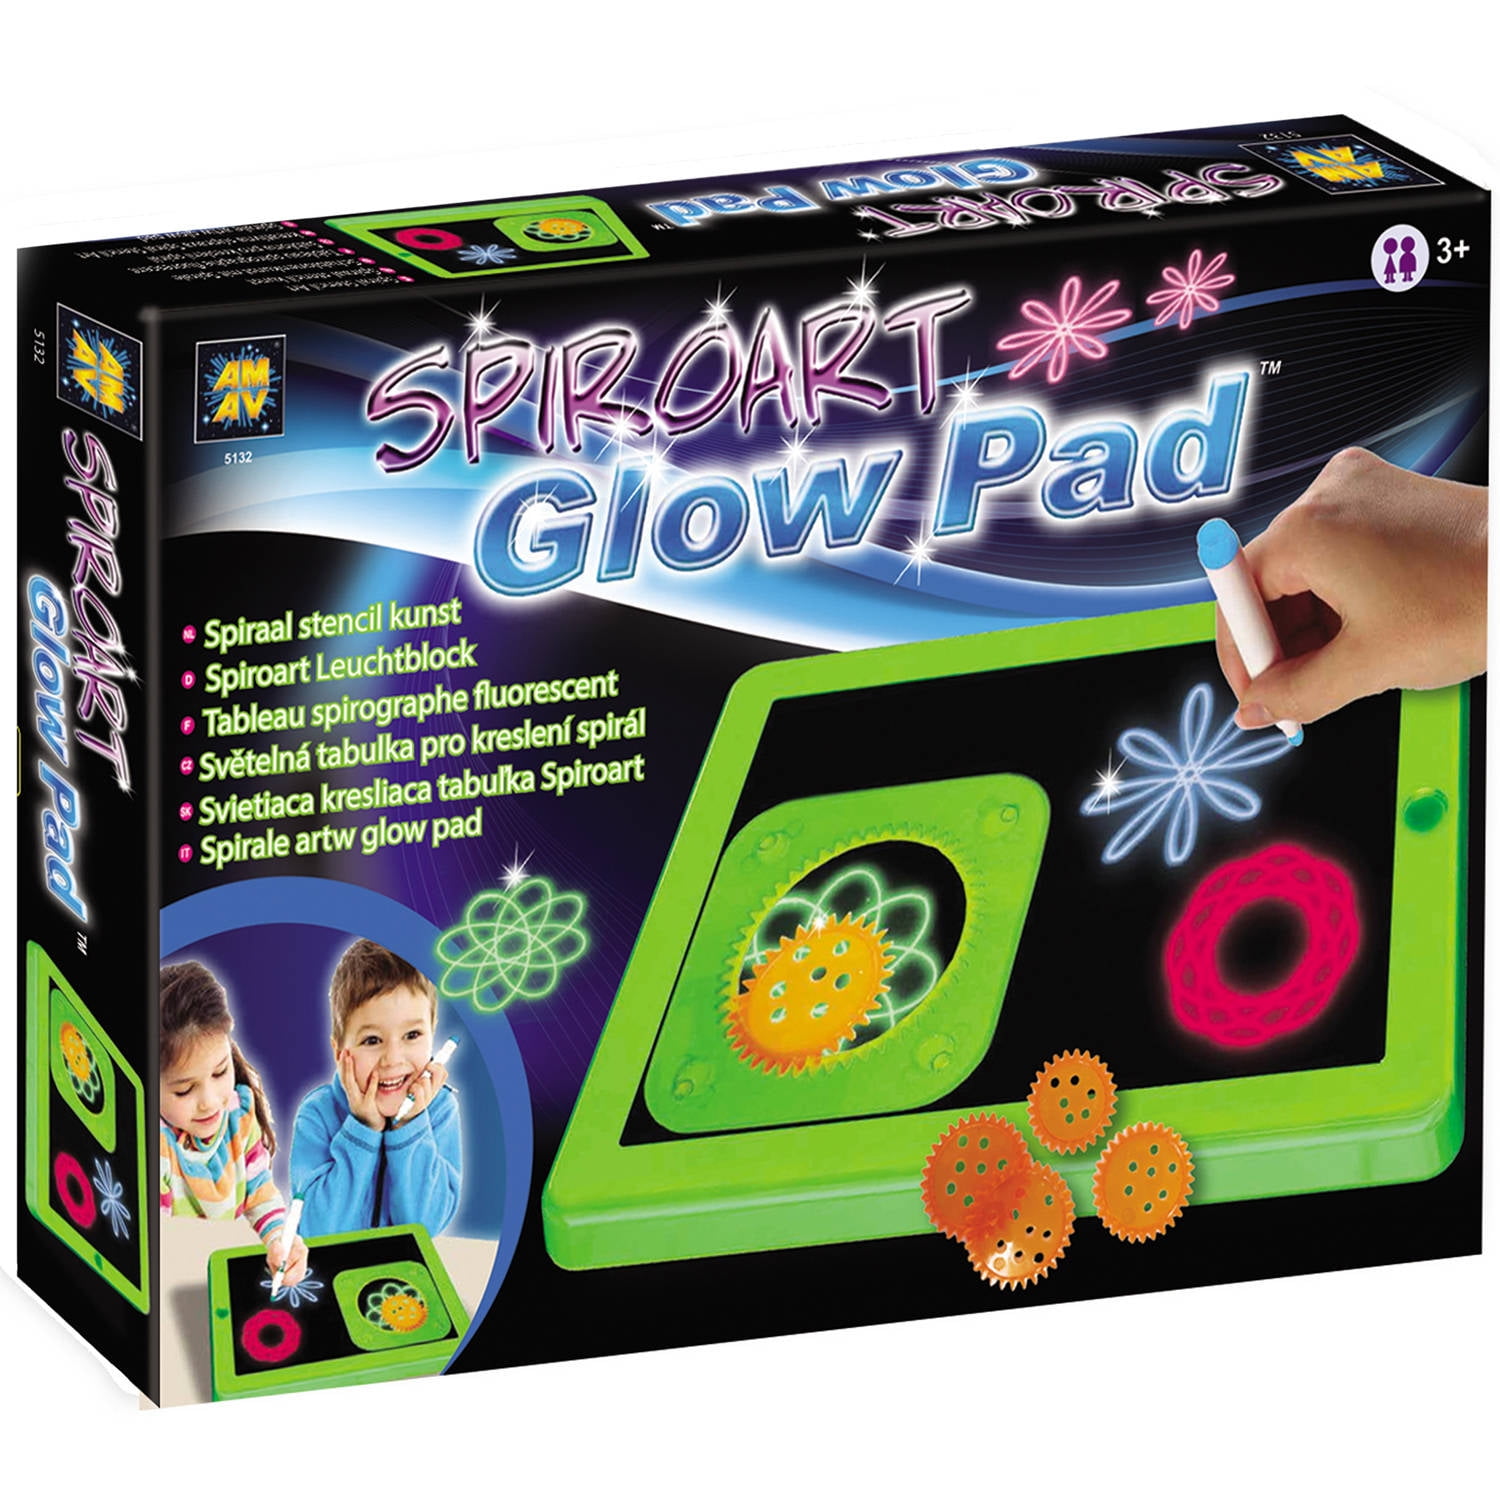 Amav Spiroart Glow Pad